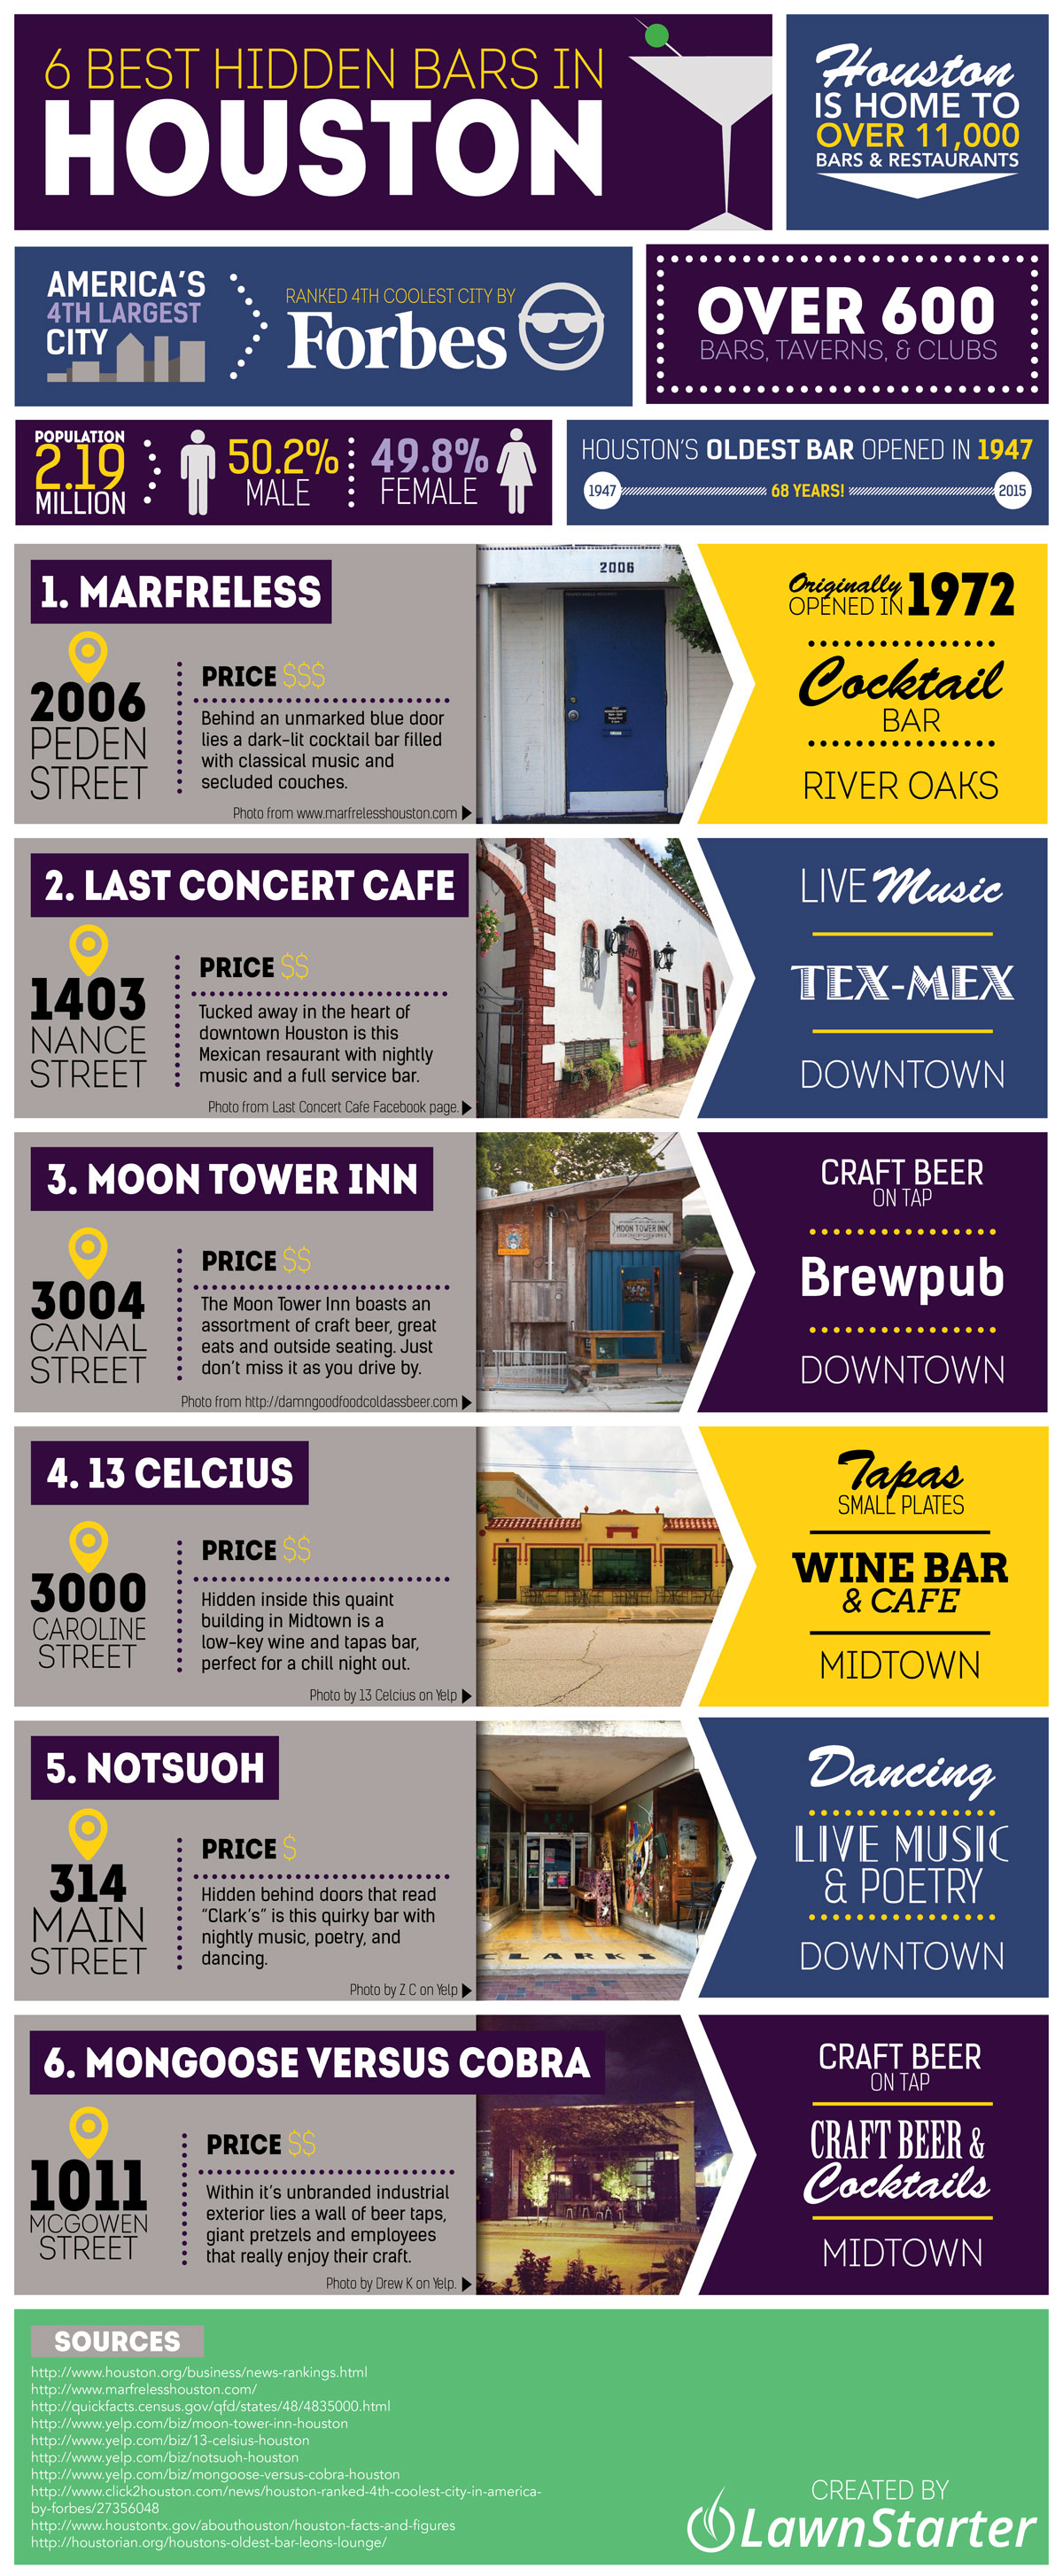 The Best 6 Hidden Bars in Houston Infographic